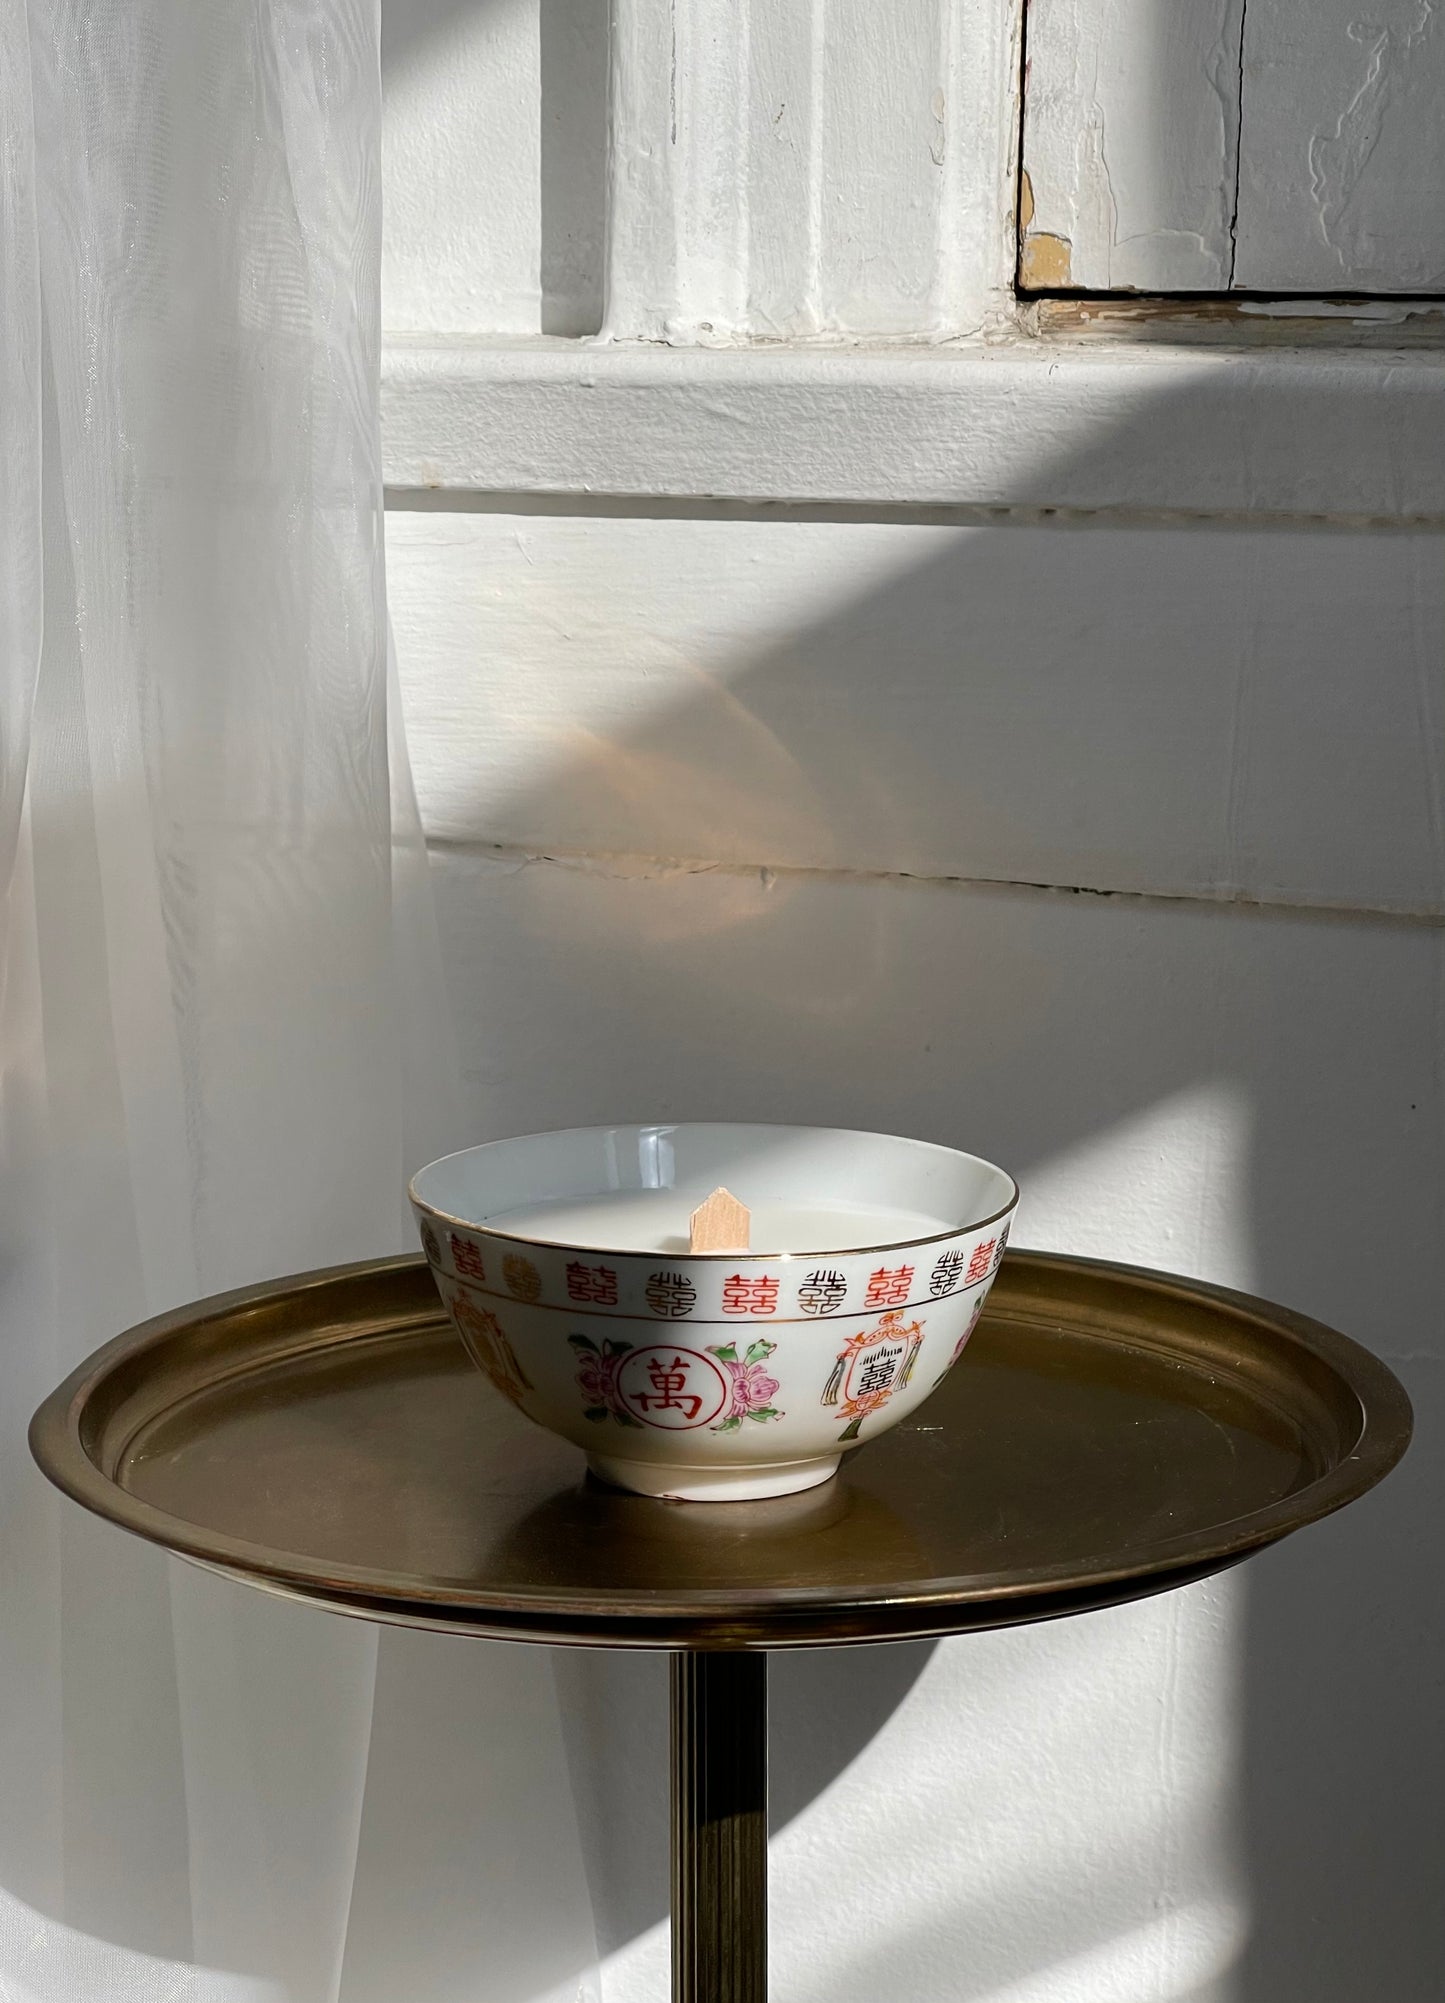 hand-crafted candle, w/ decorative petite ceramic bowl i